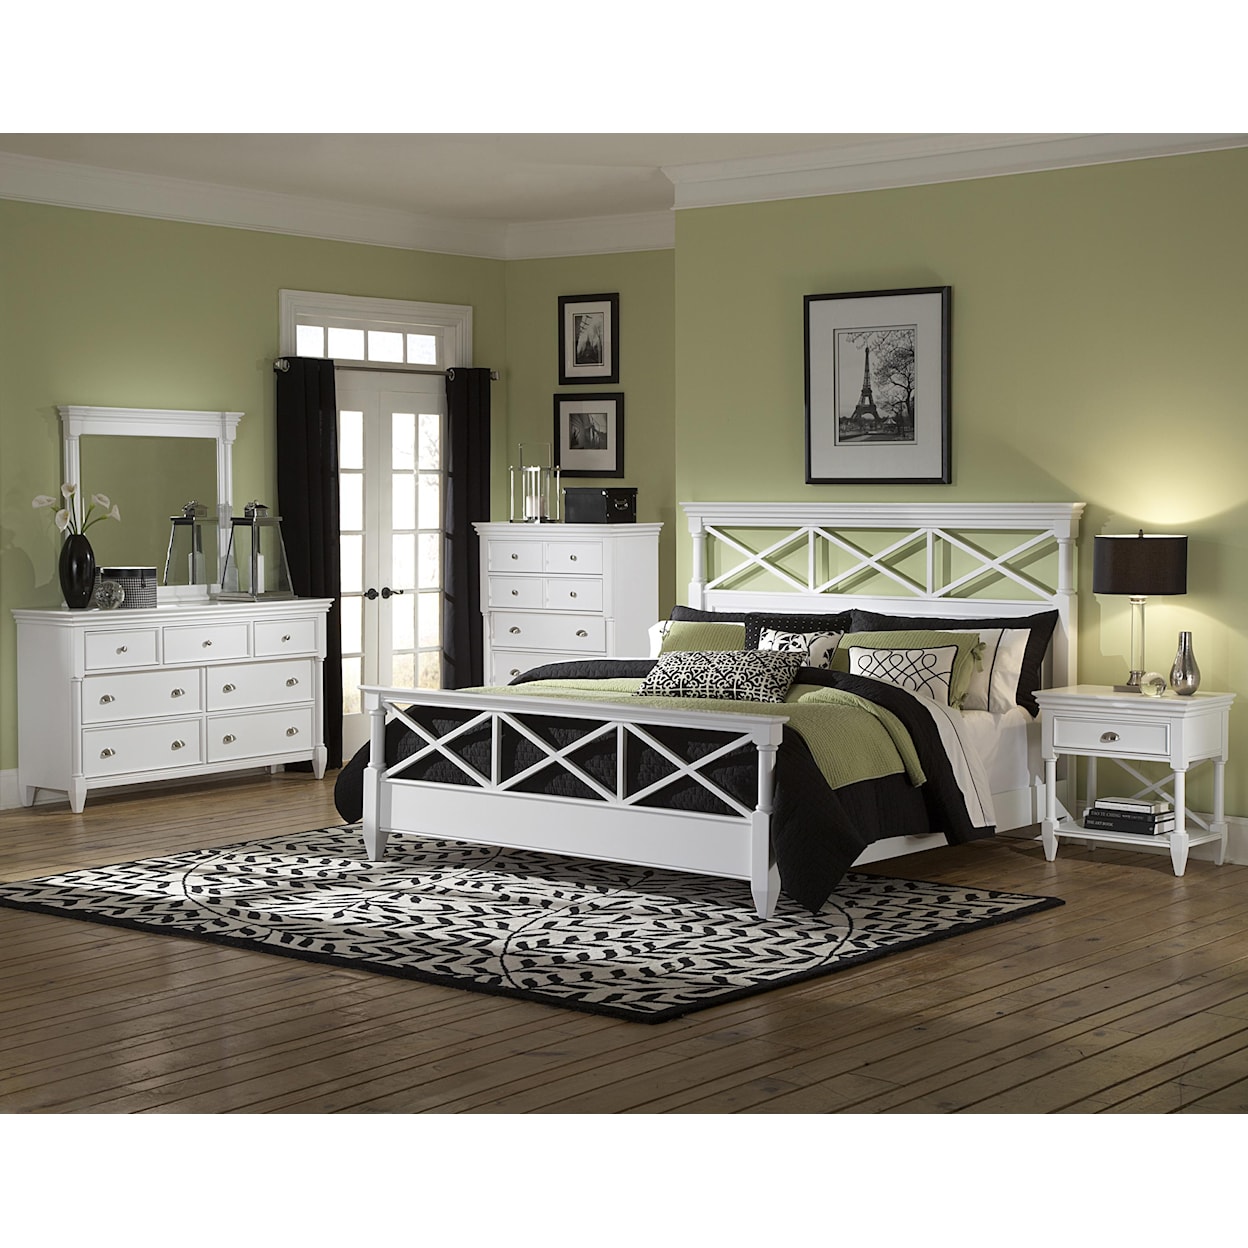 Magnussen Home Kasey Bedroom California King Panel Bed